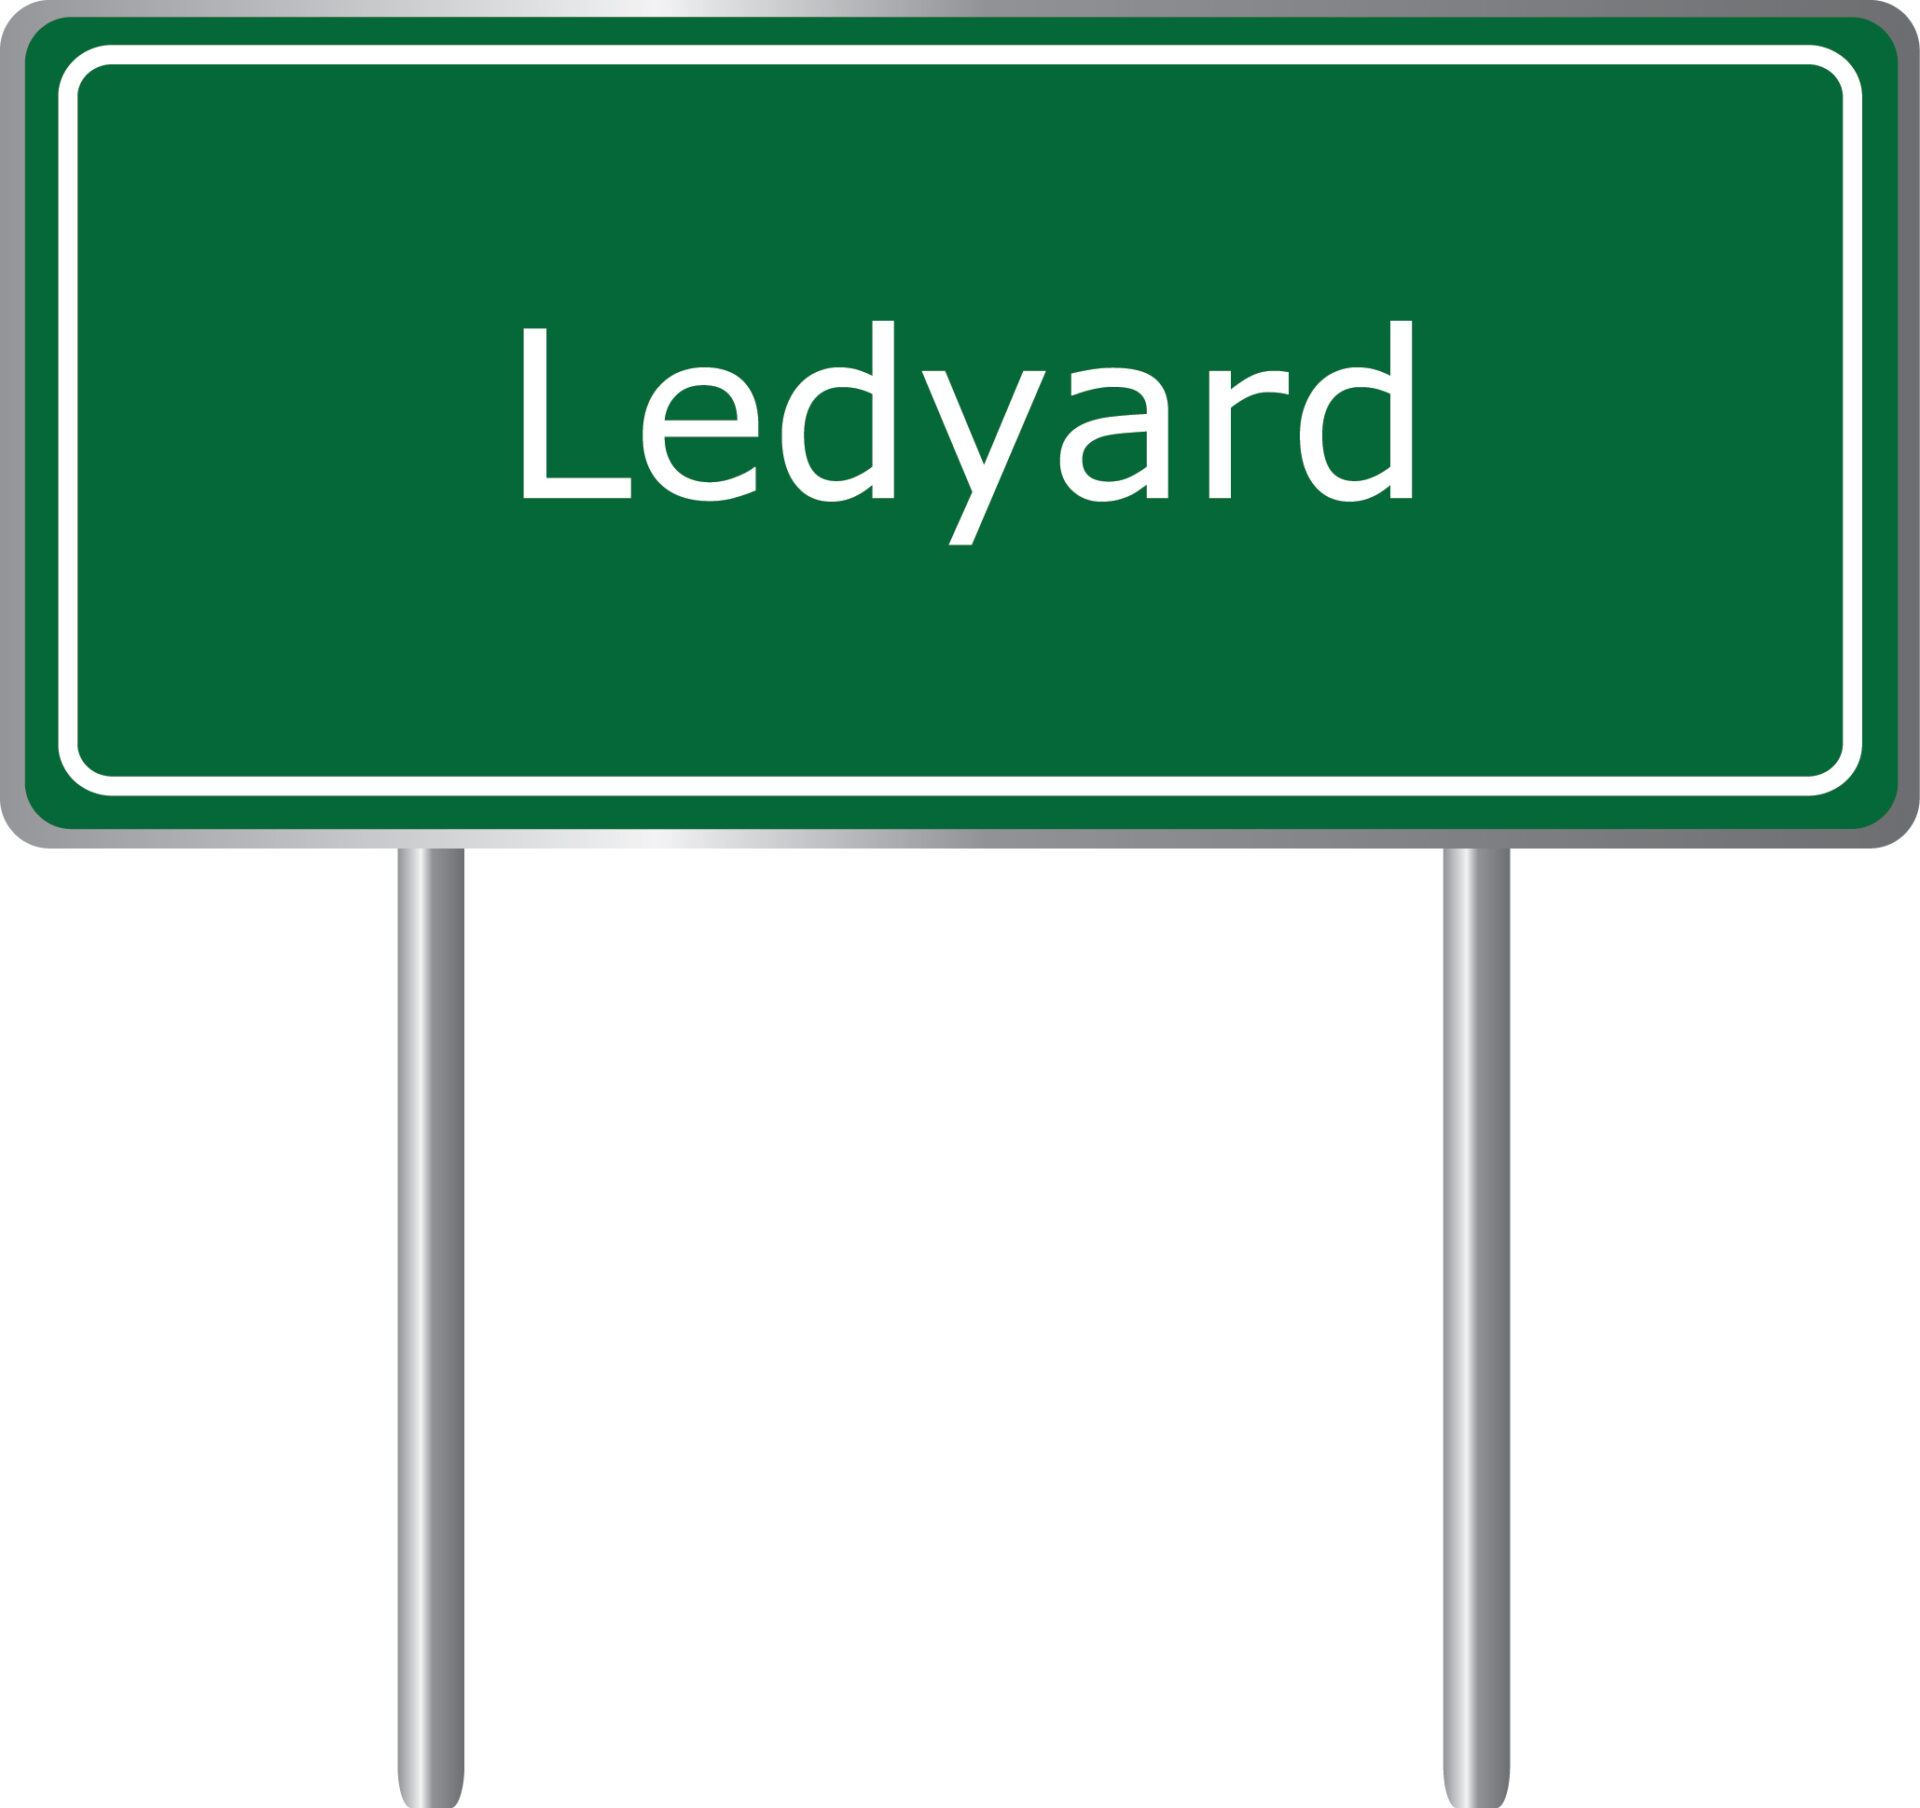 image of ledyard road sign for restaurants in ledyard.